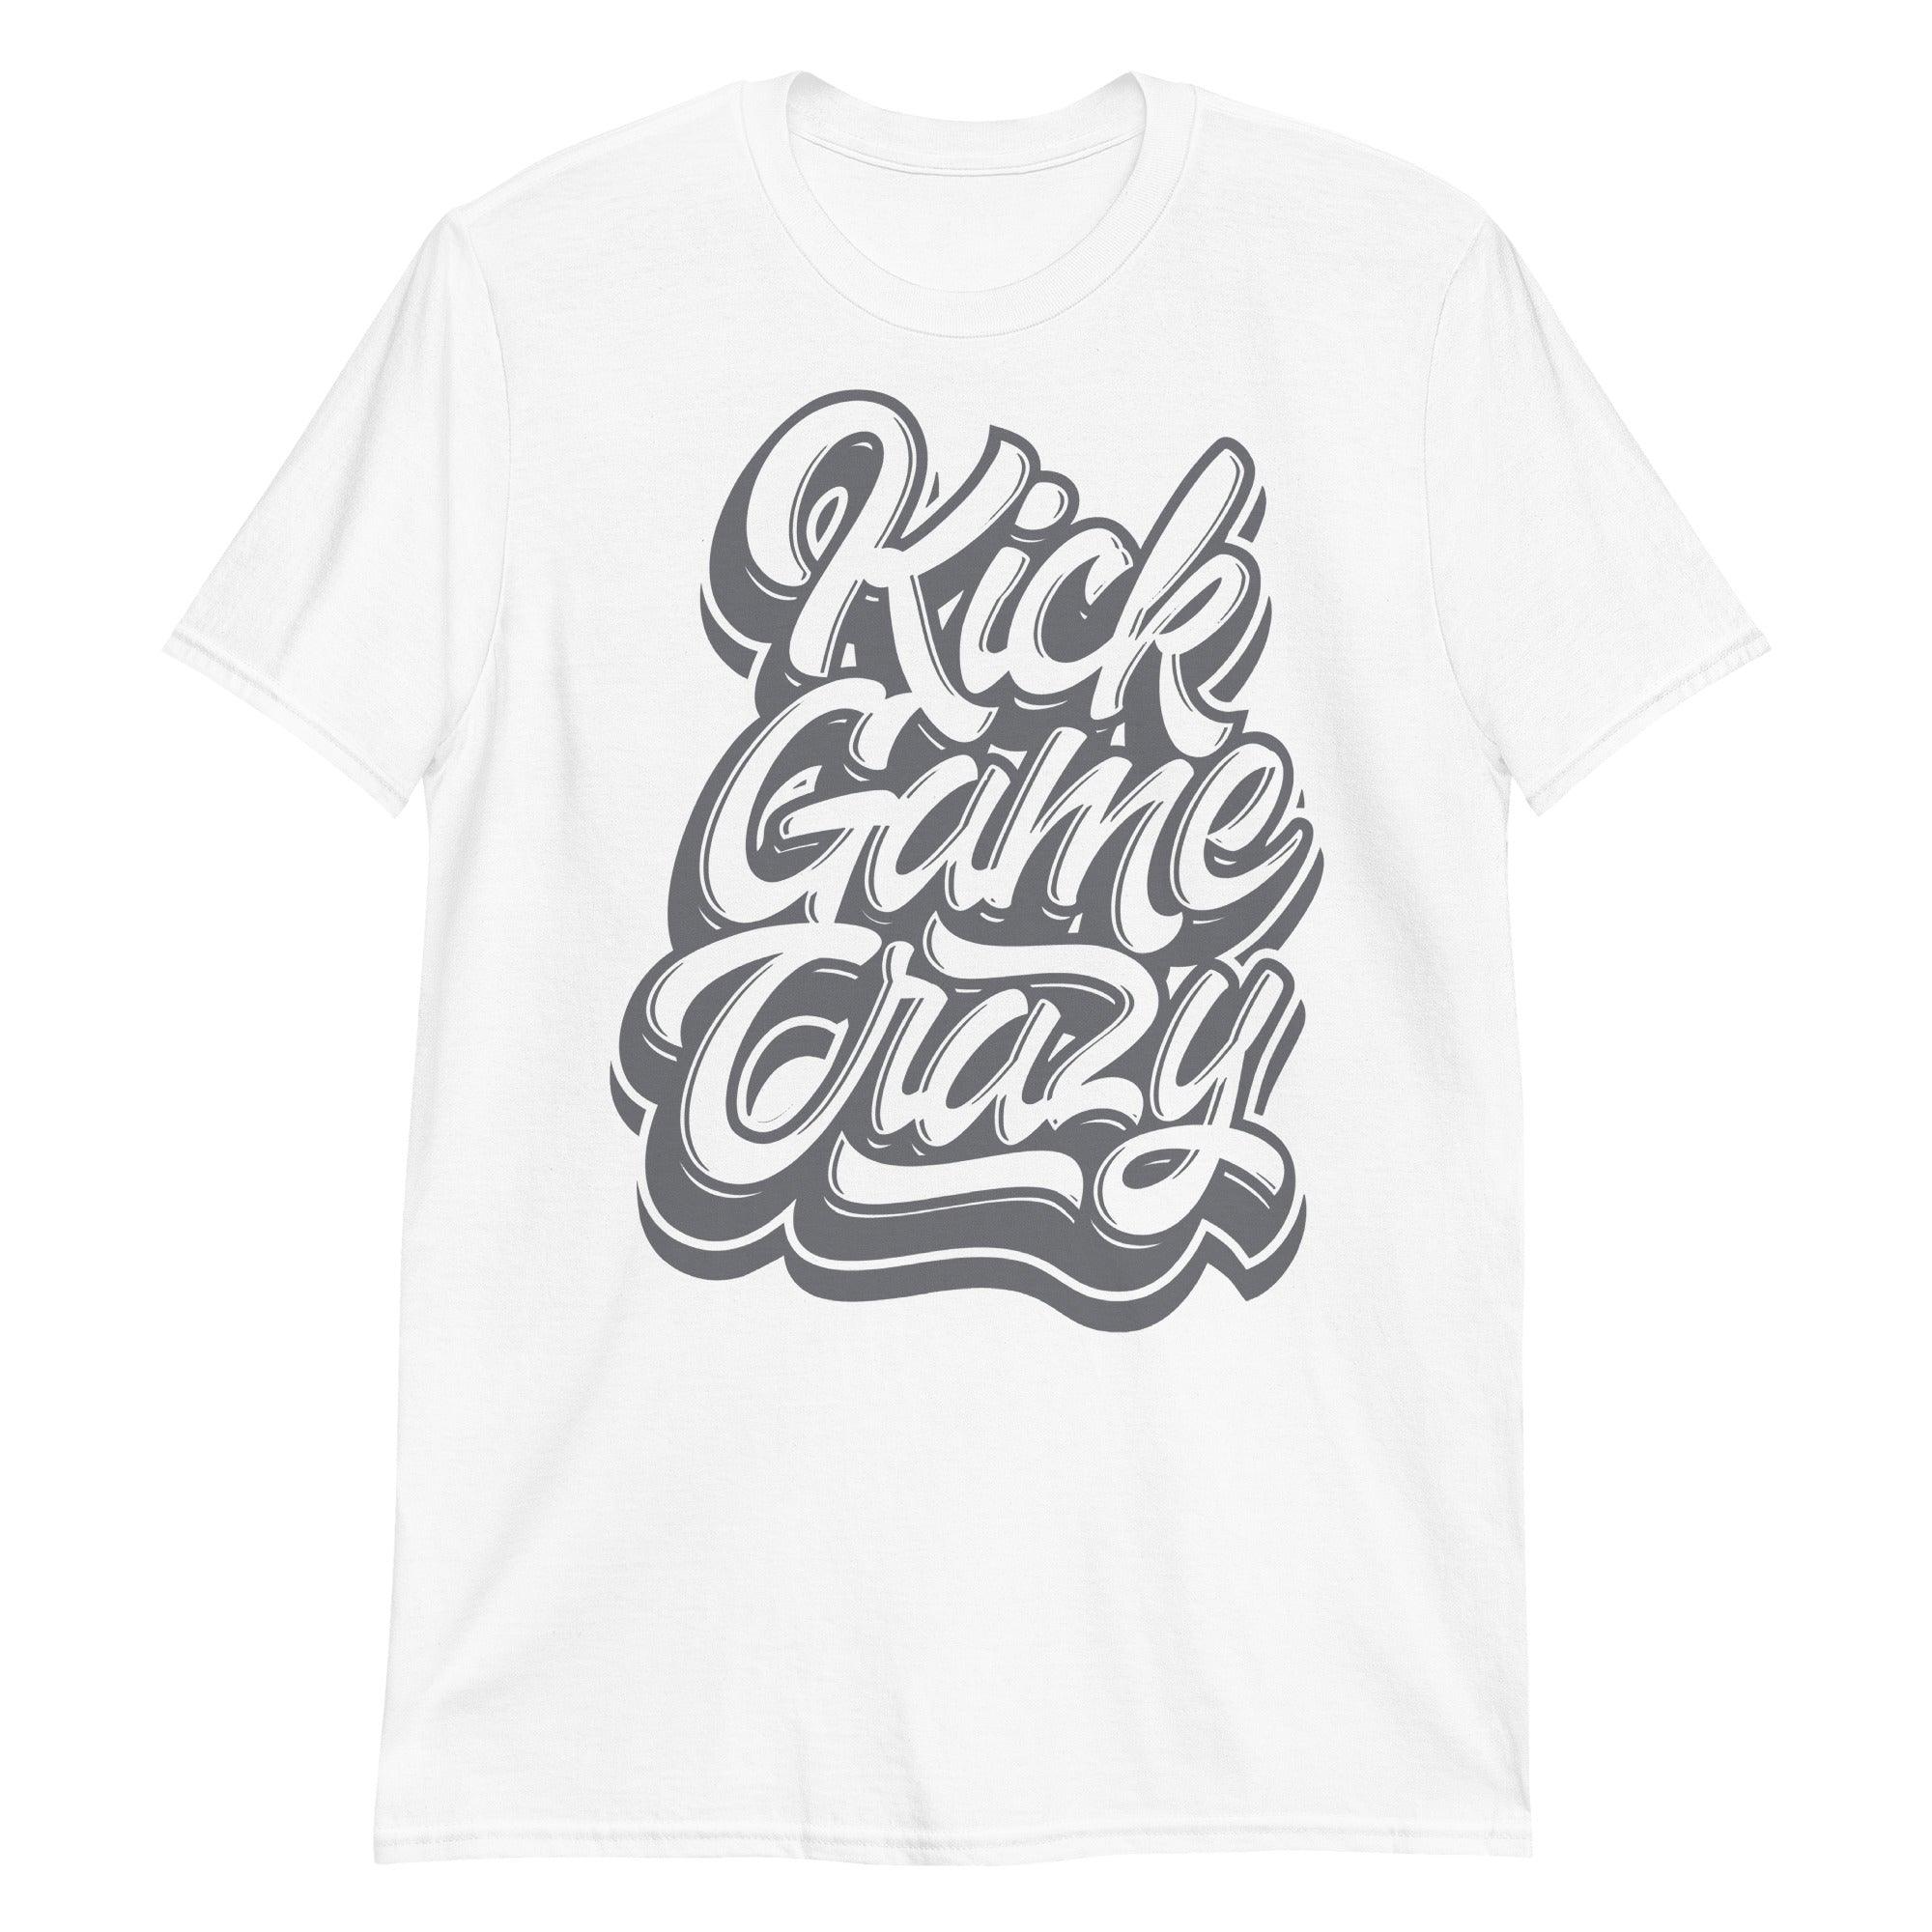 Kick Game Crazy Shirt photo